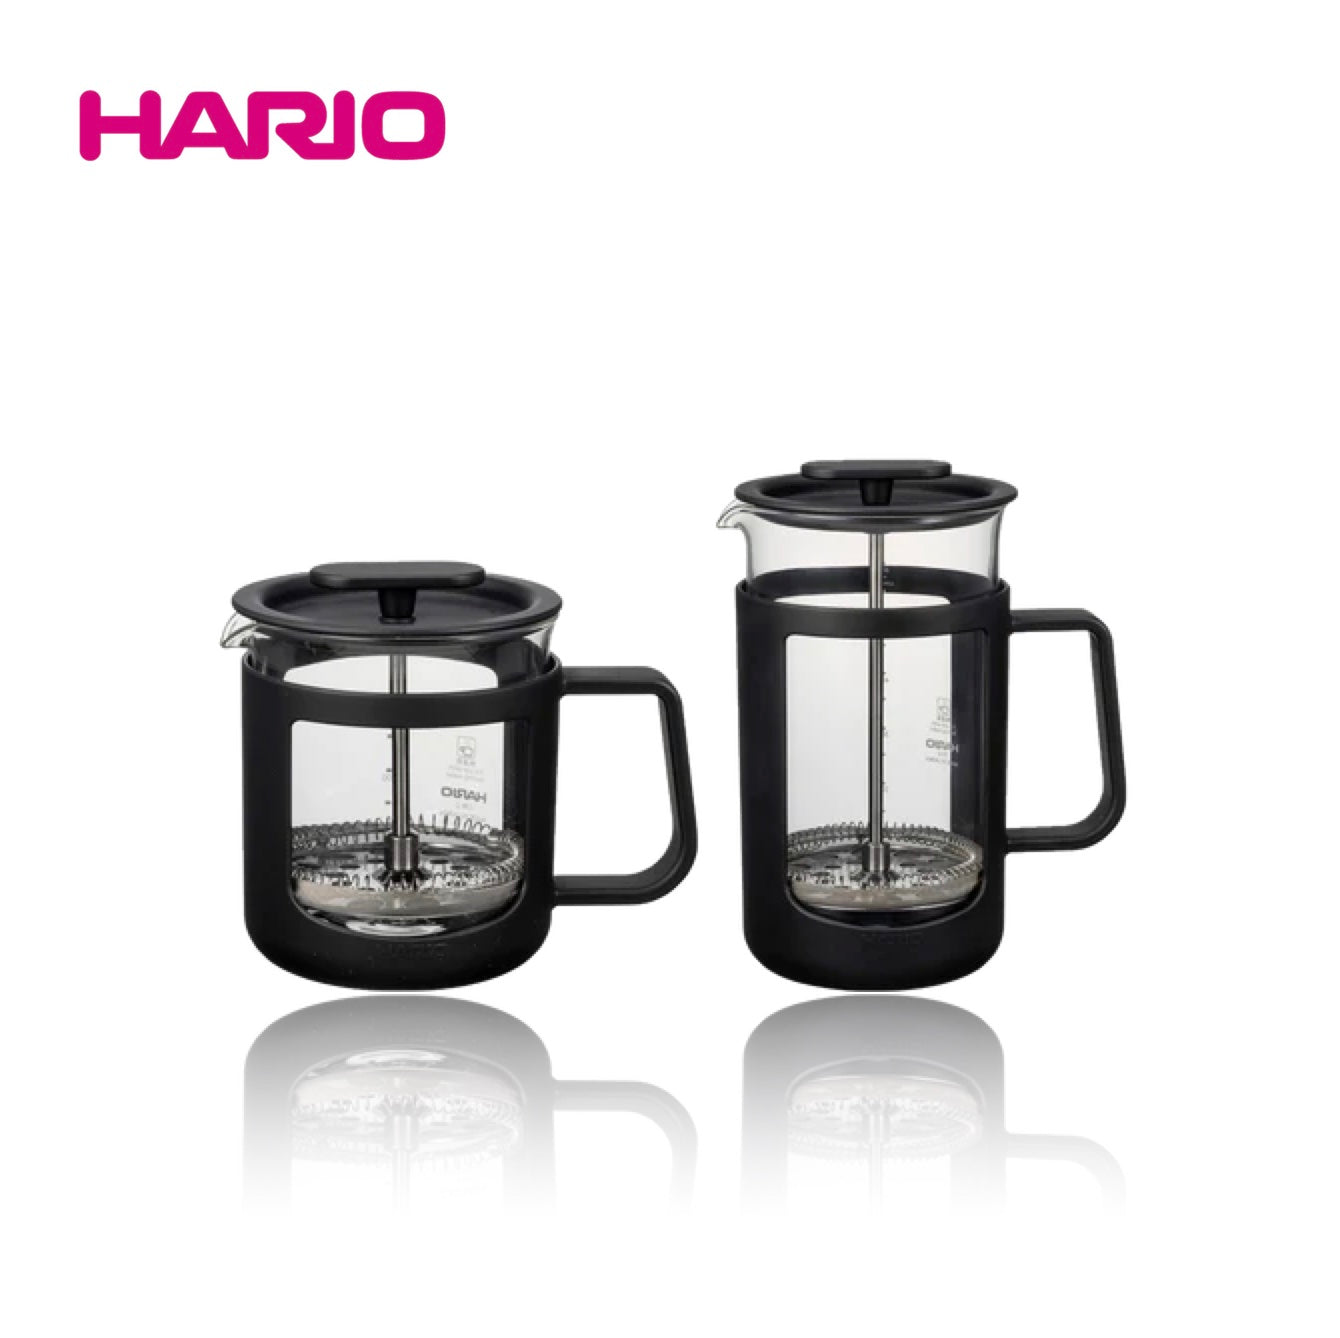 Hario Tea and Coffee Press